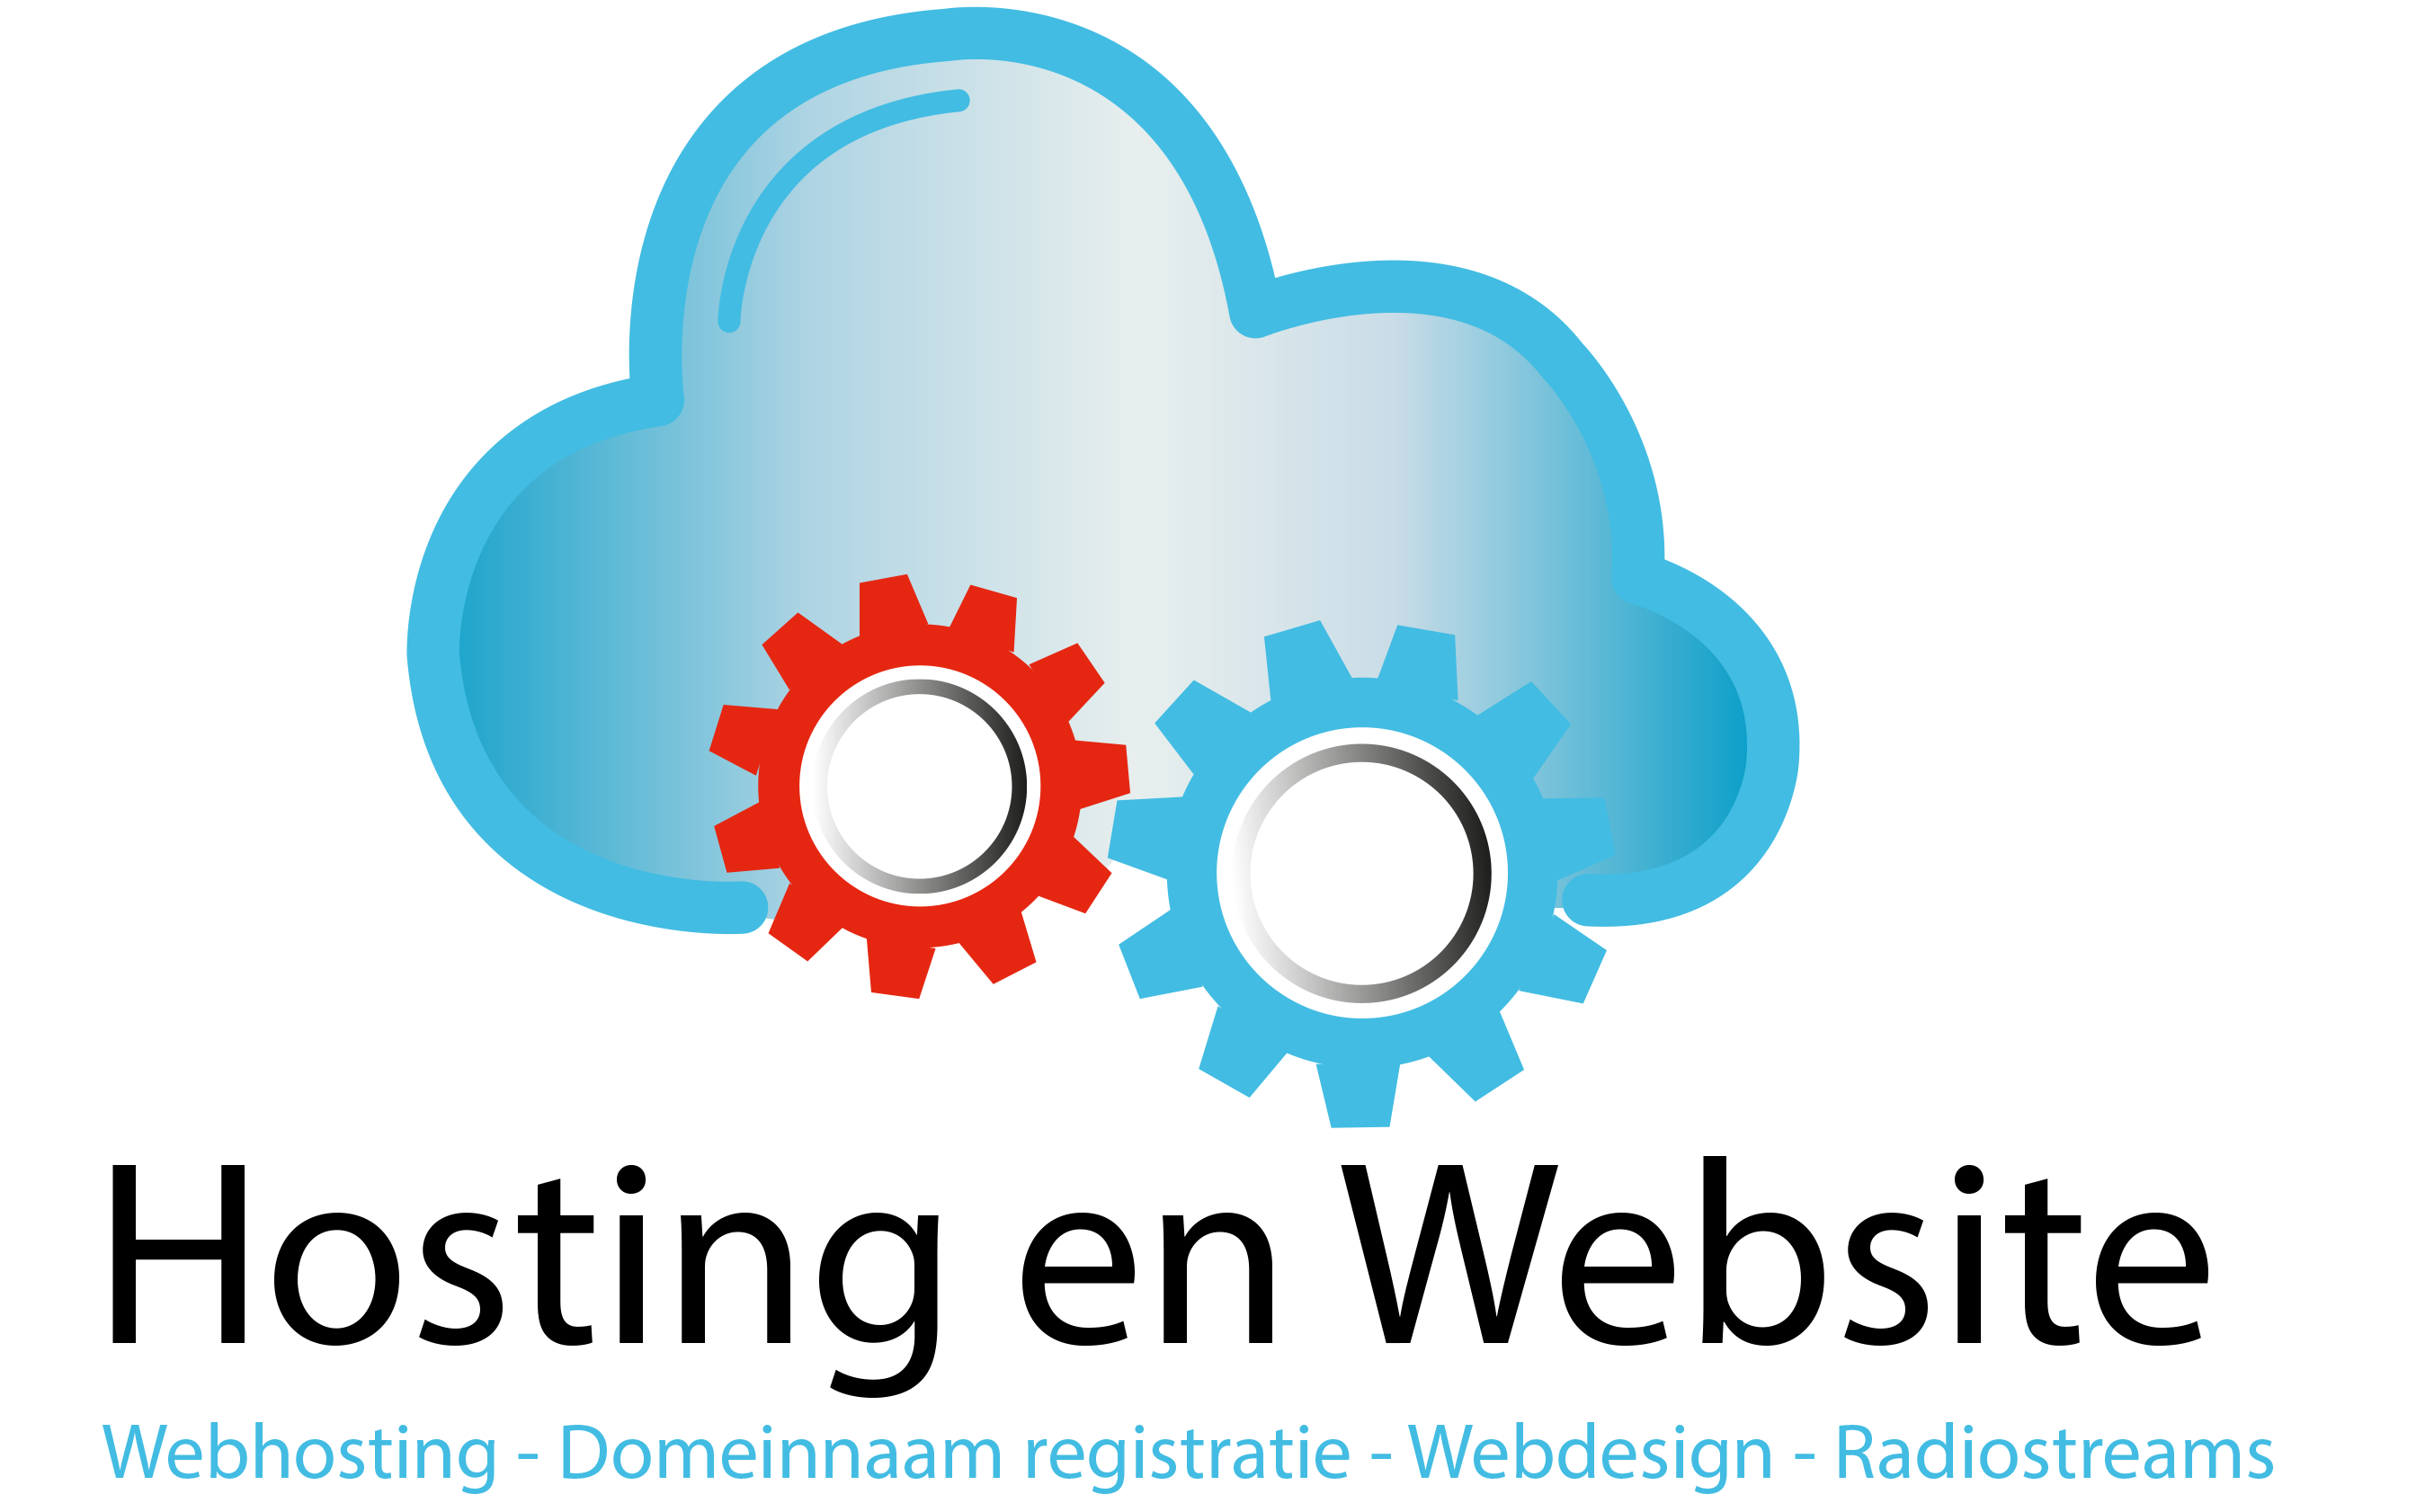 Webhosting - Radiostreams - domeinnaam registratie - Webdesign